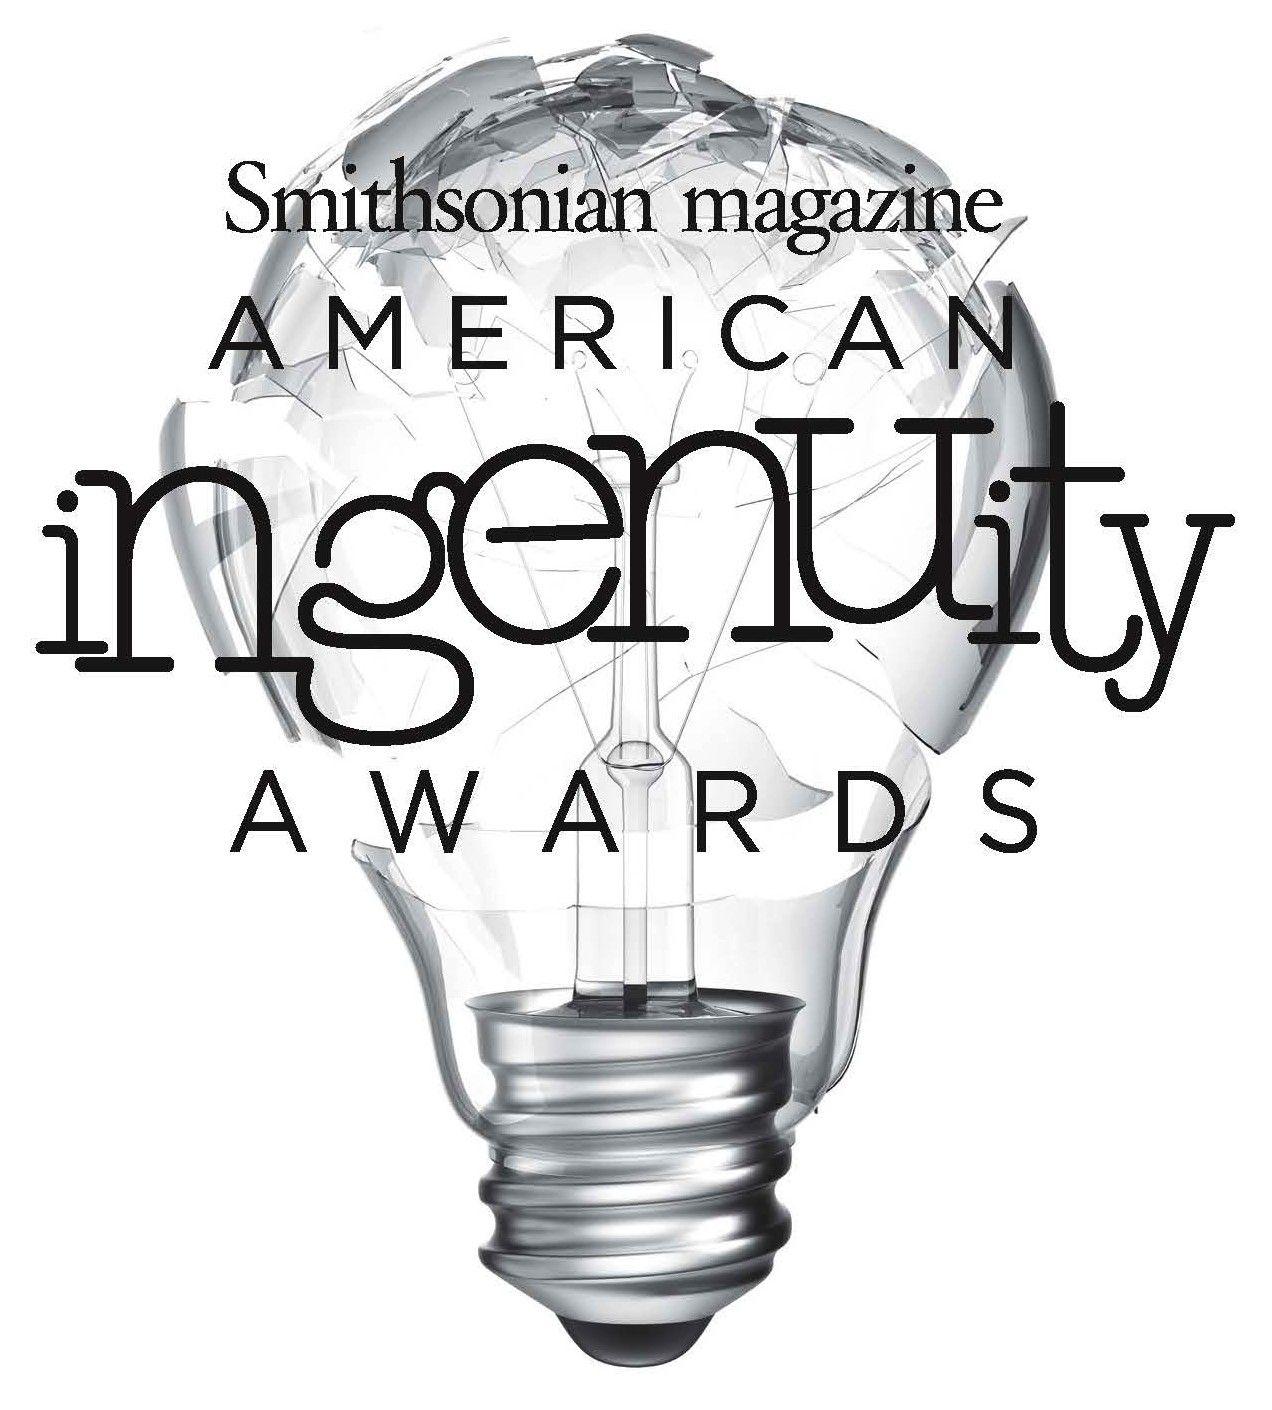 Ingenuity Logo - Smithsonian Announces the 2017 “American Ingenuity Awards” Winners ...